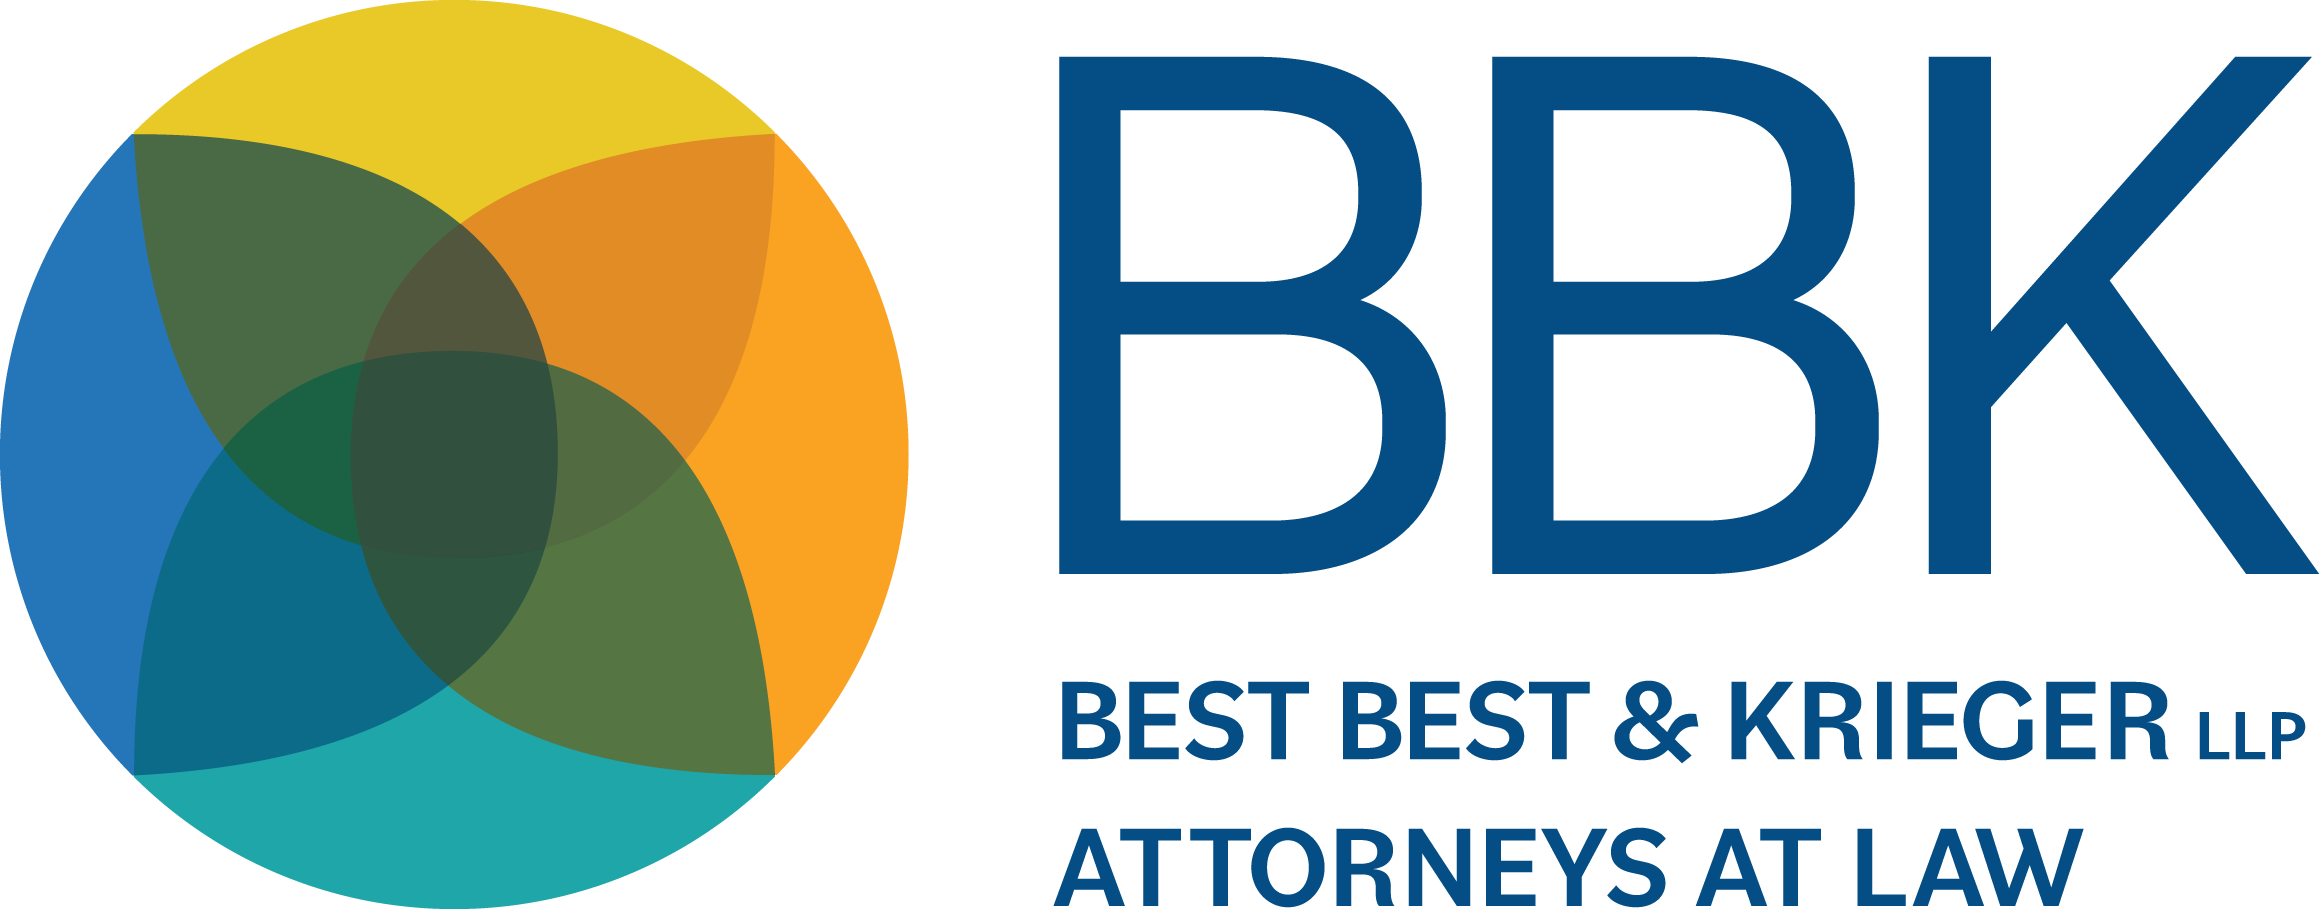 BBK Firm Attorneys at Law logo